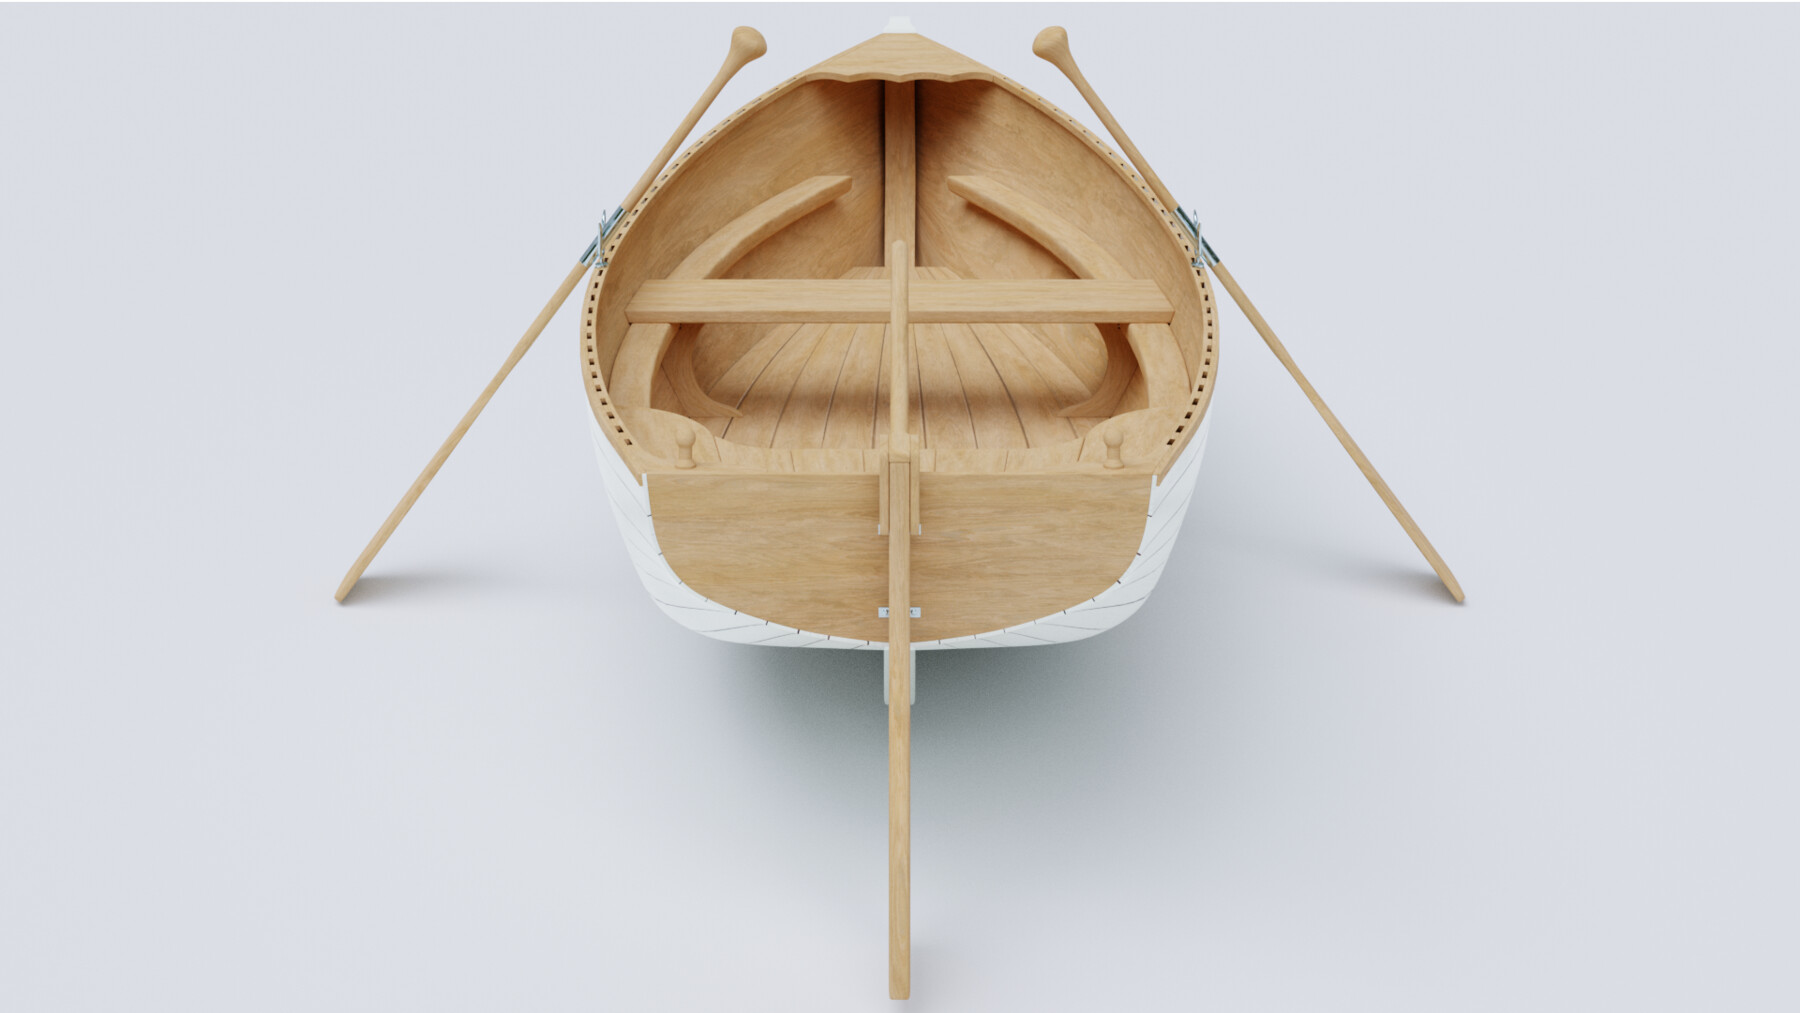 Wooden Boat 3d Model